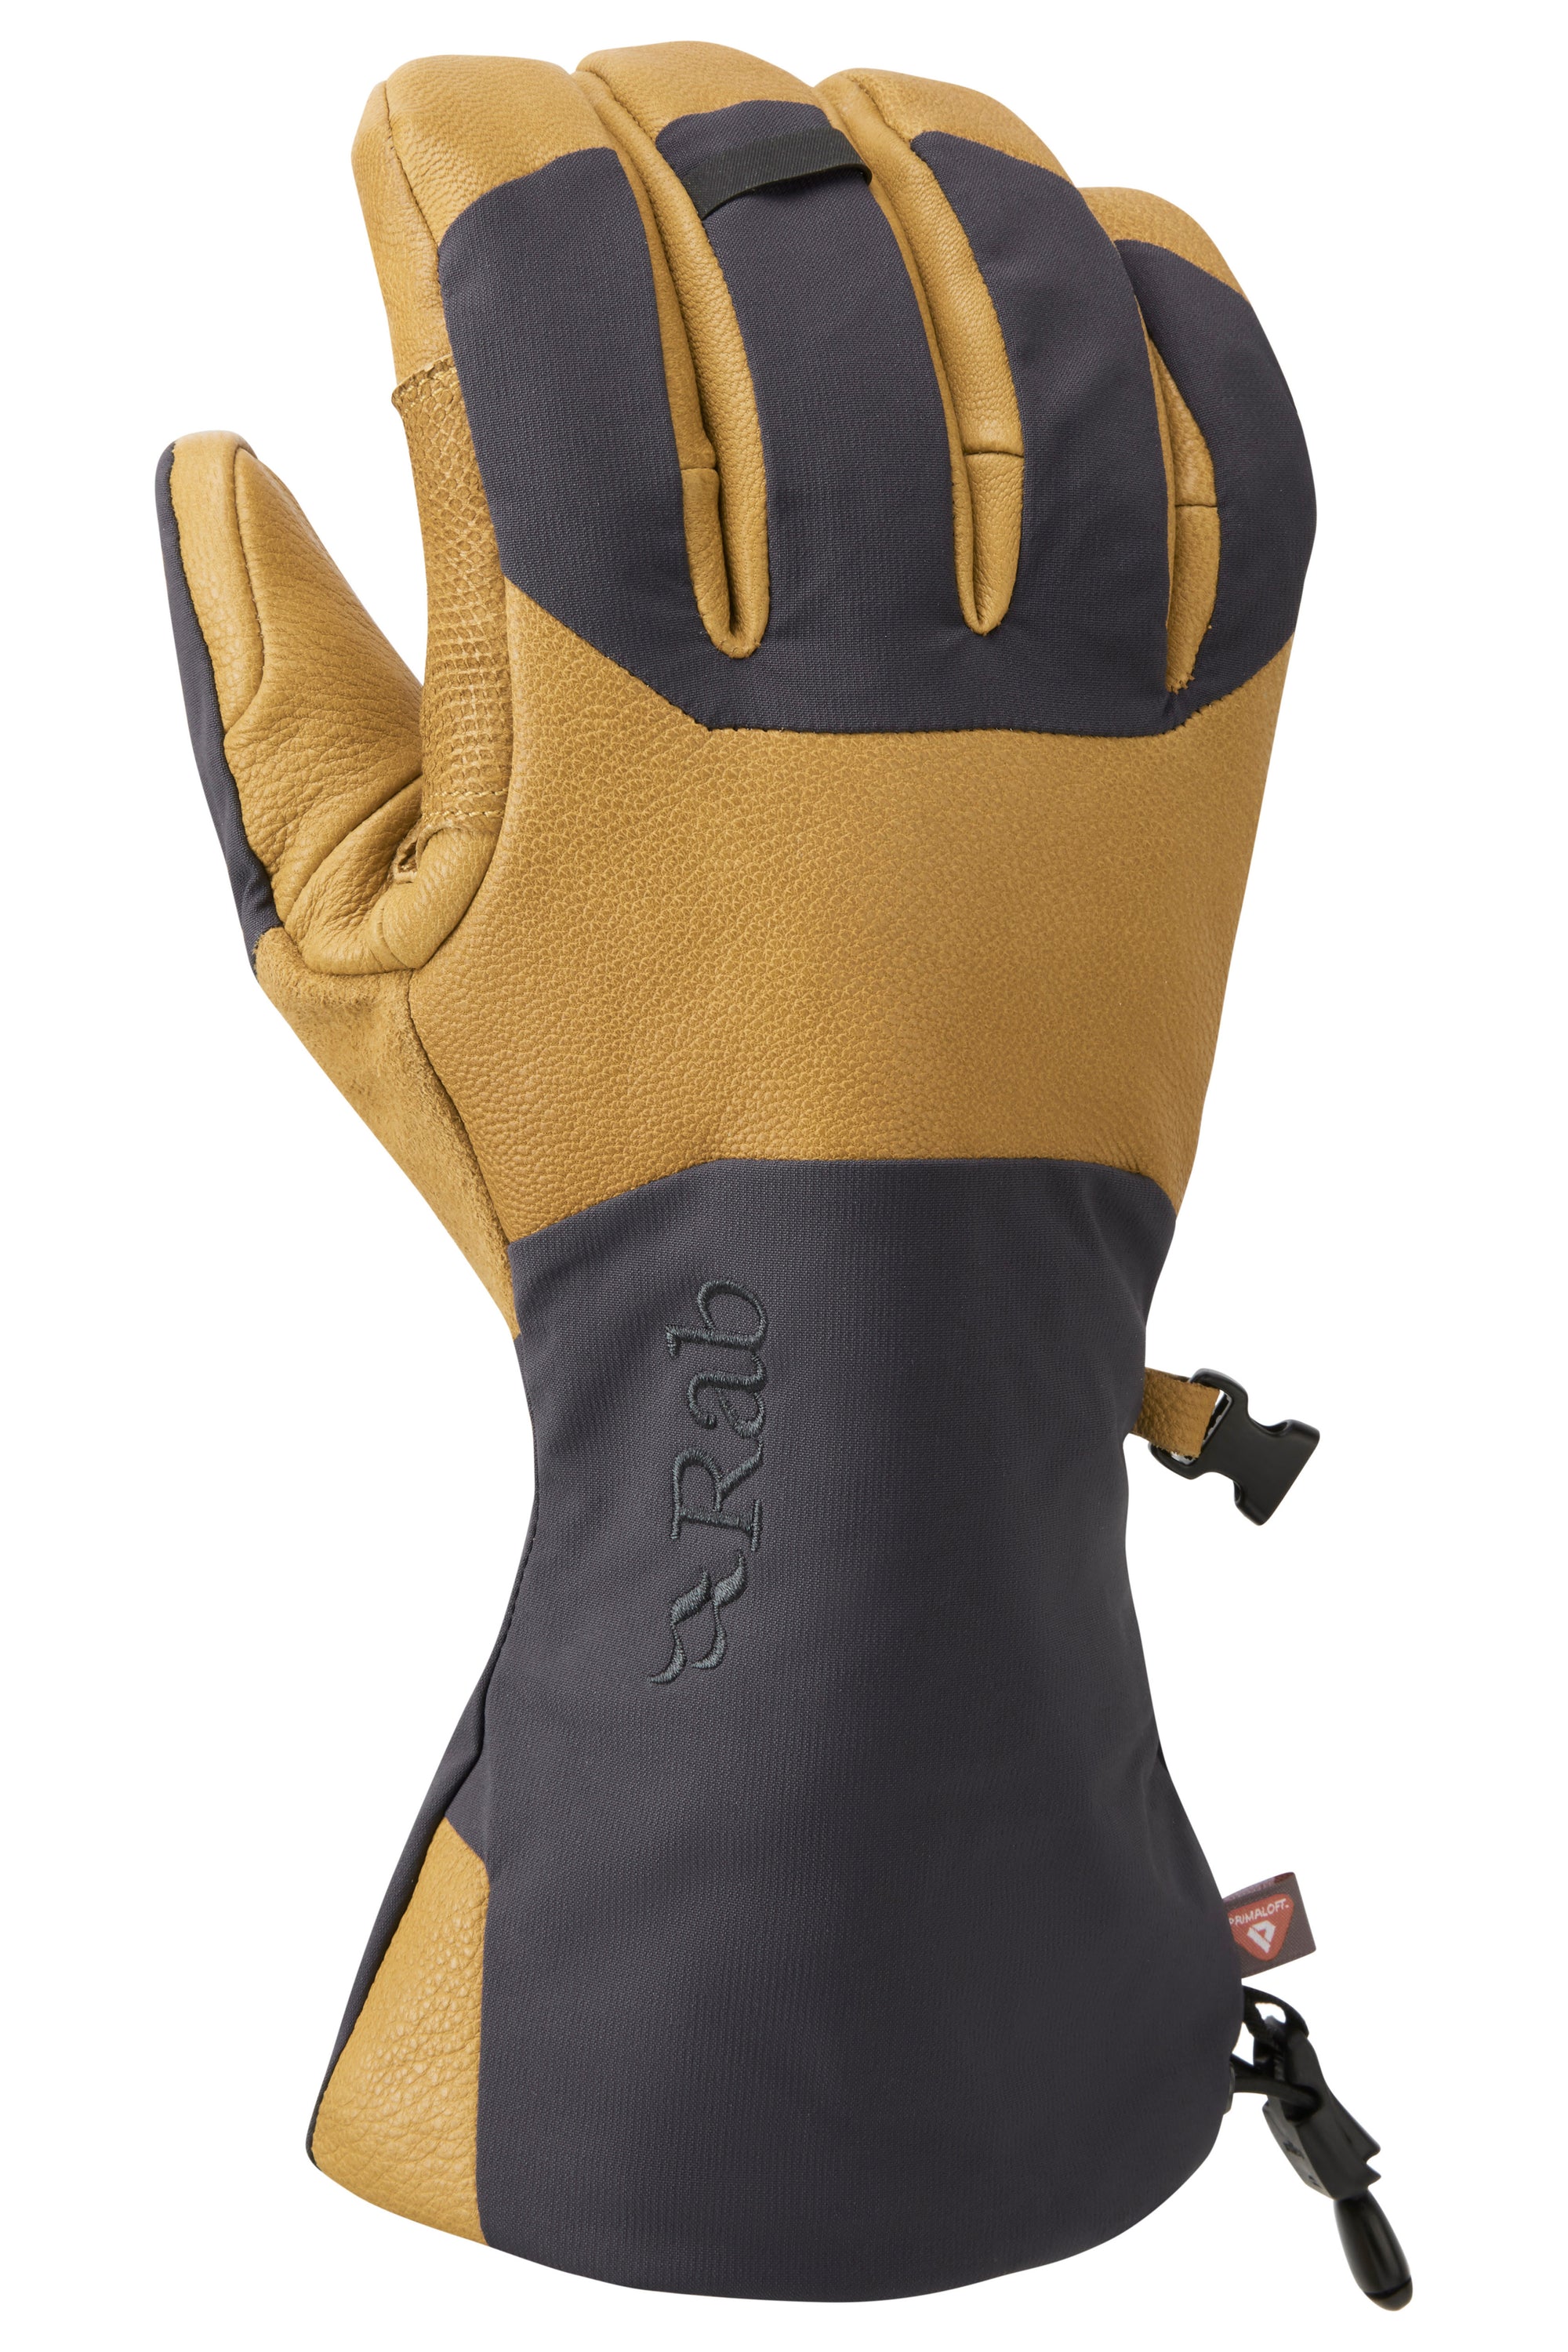 Rab Men's Guide 2 Gore-TEX Glove